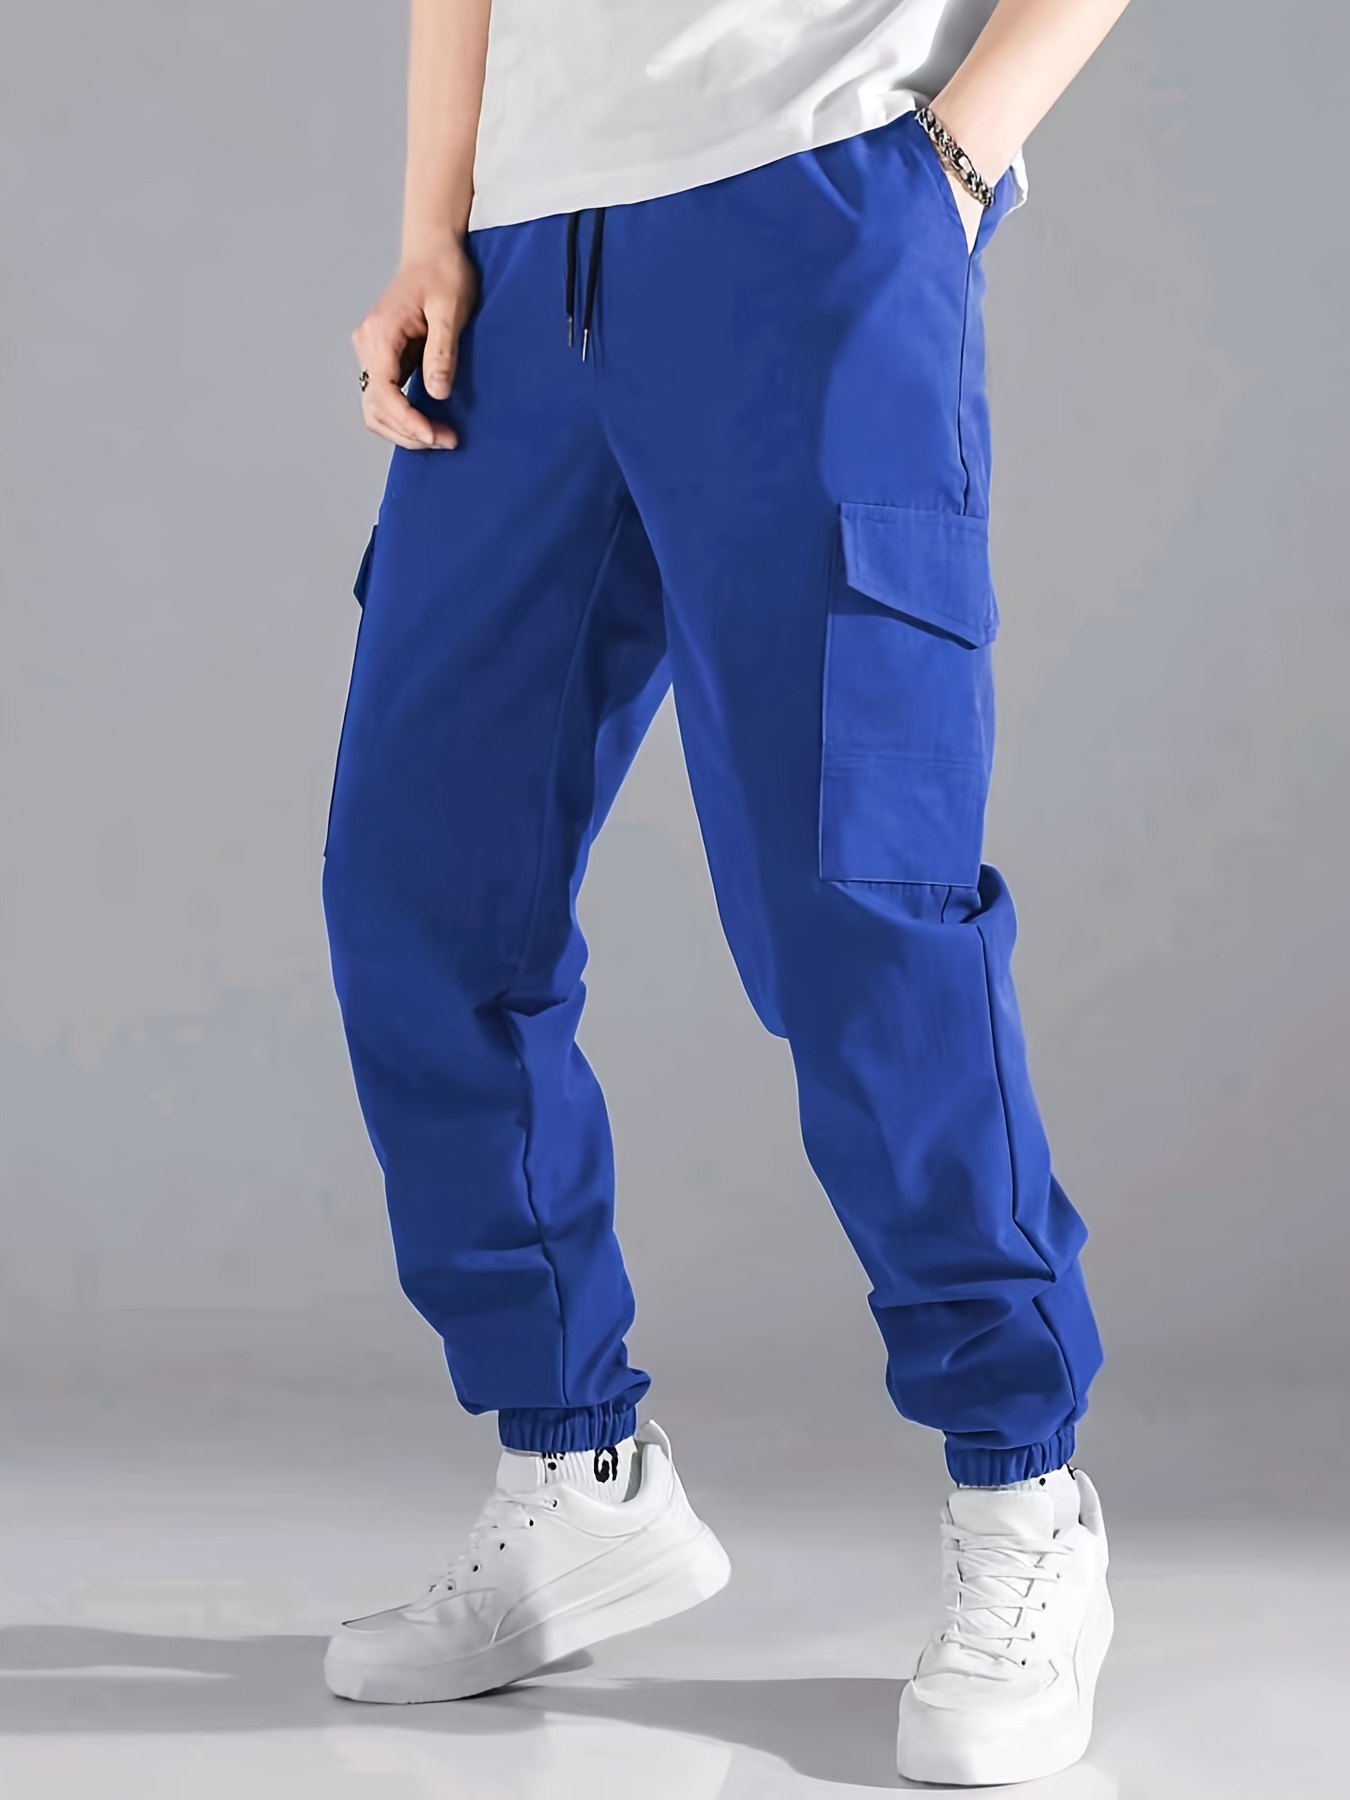 Tek Gear Solid Blue Sweatpants Size XXL - 55% off